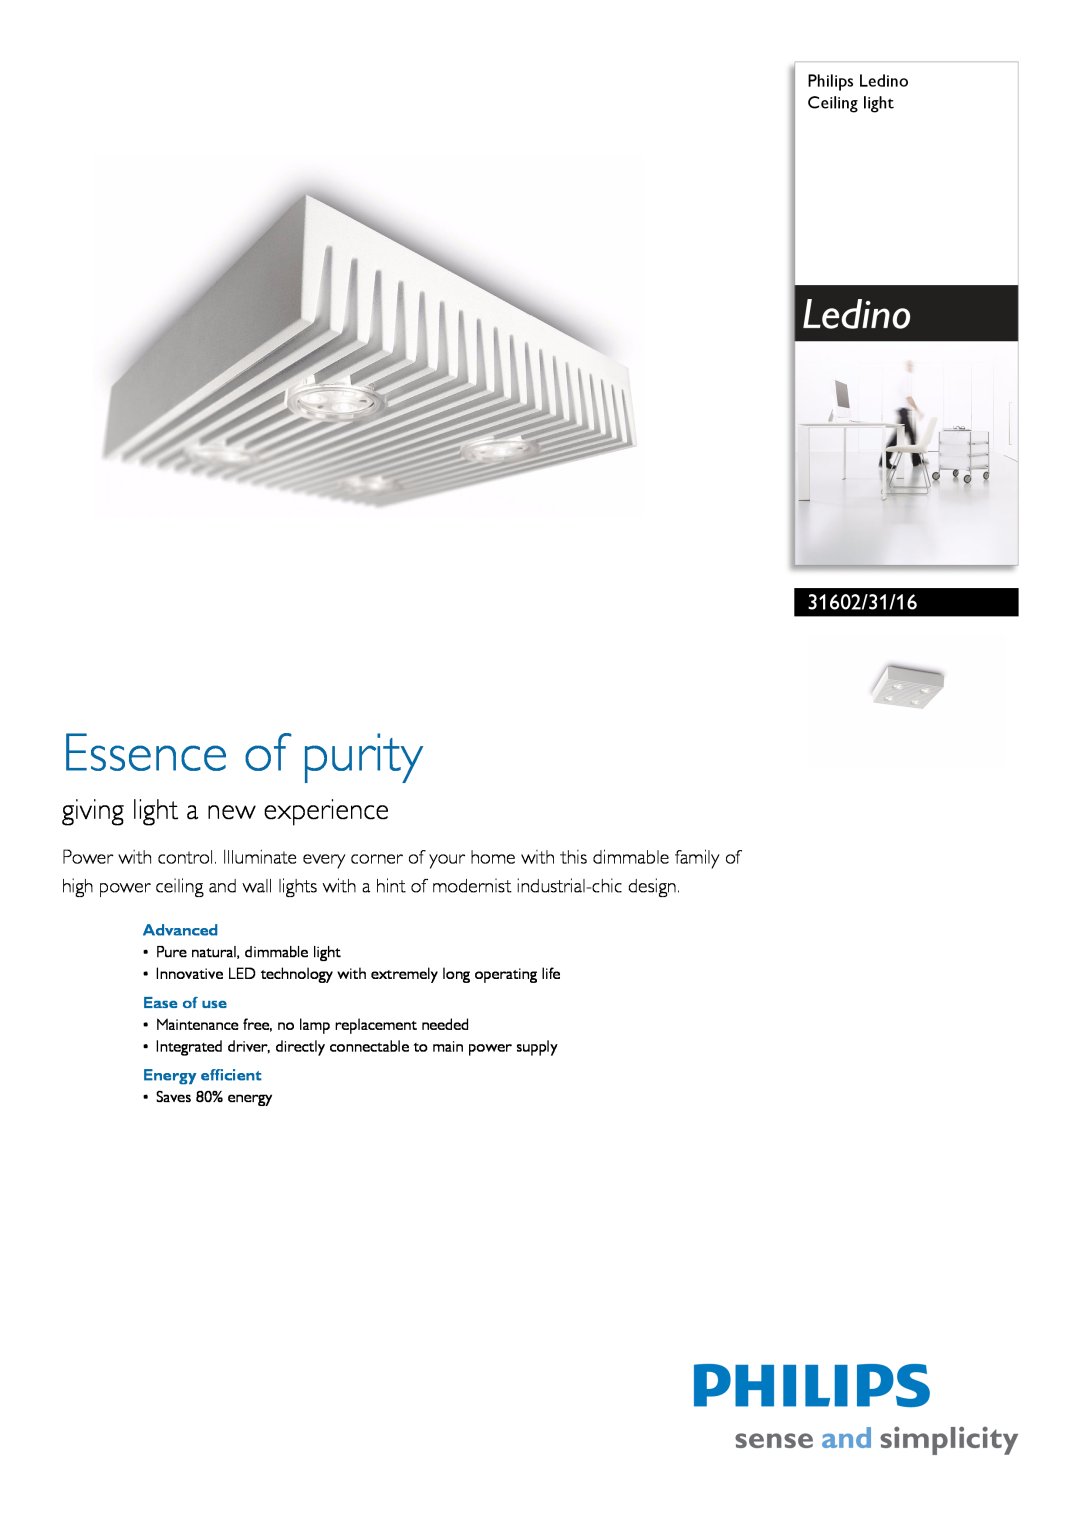 Philips 31602/31/16 manual Philips Ledino Ceiling light, Advanced, Ease of use, Energy efficient, Essence of purity 